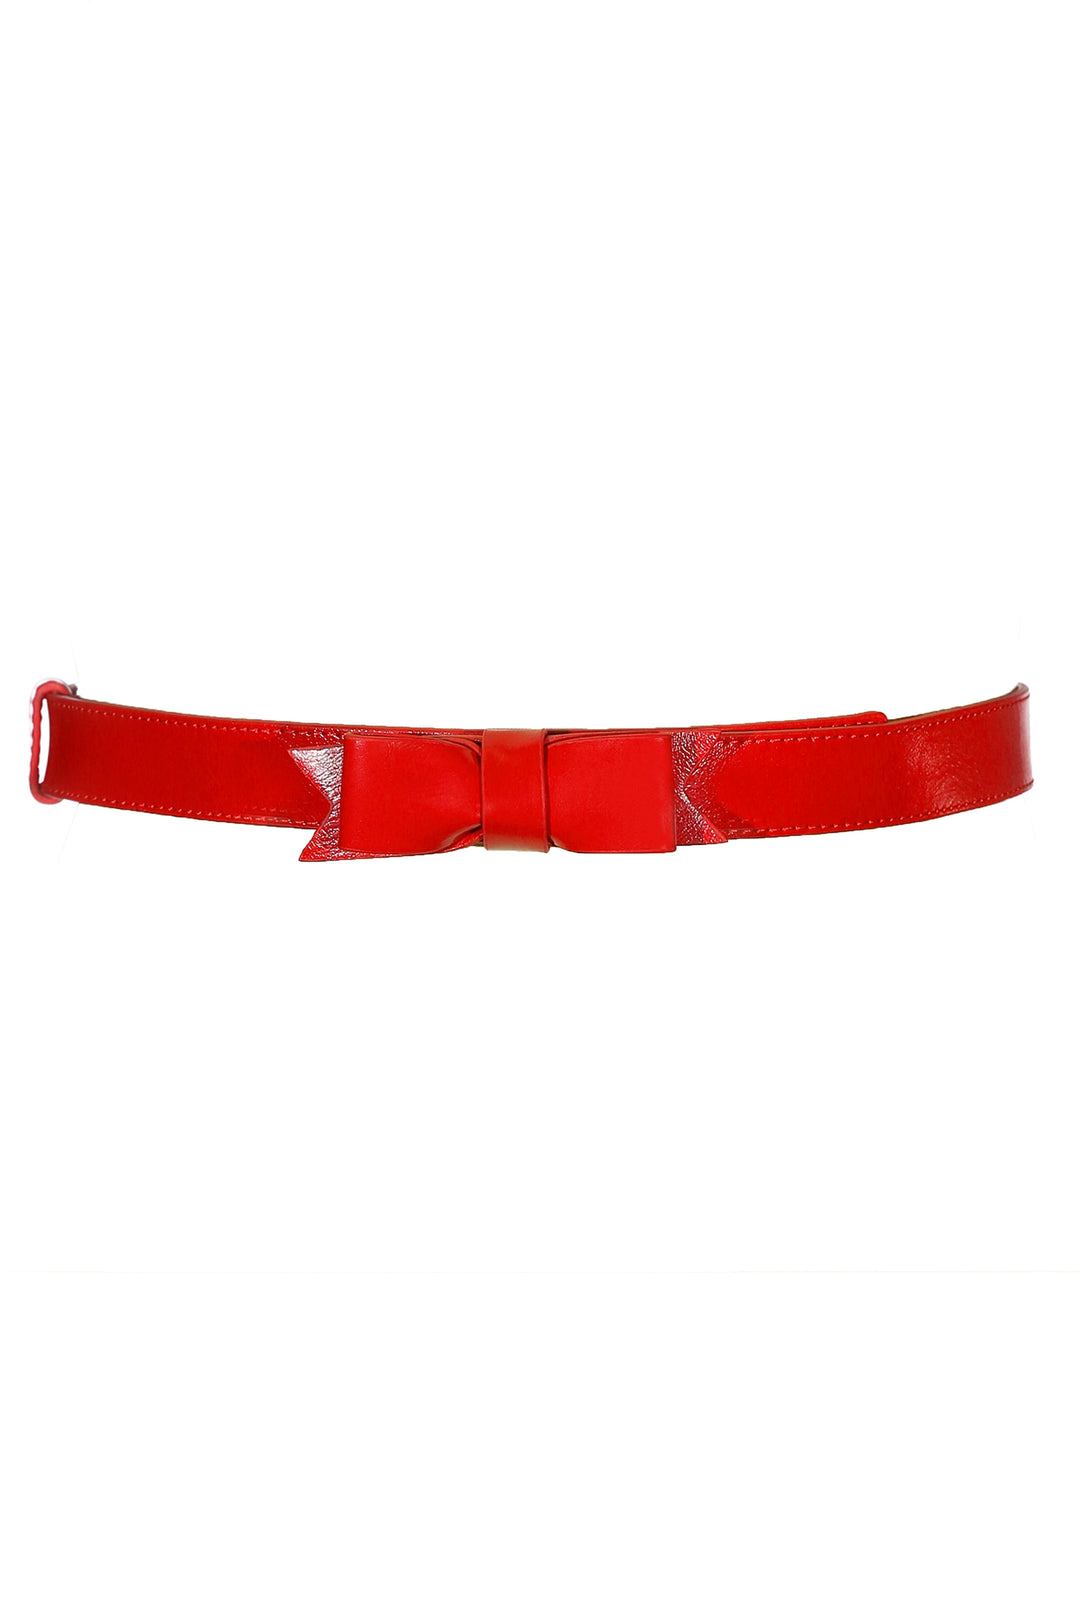 Charm School Belt (Red) - Kitten D'Amour